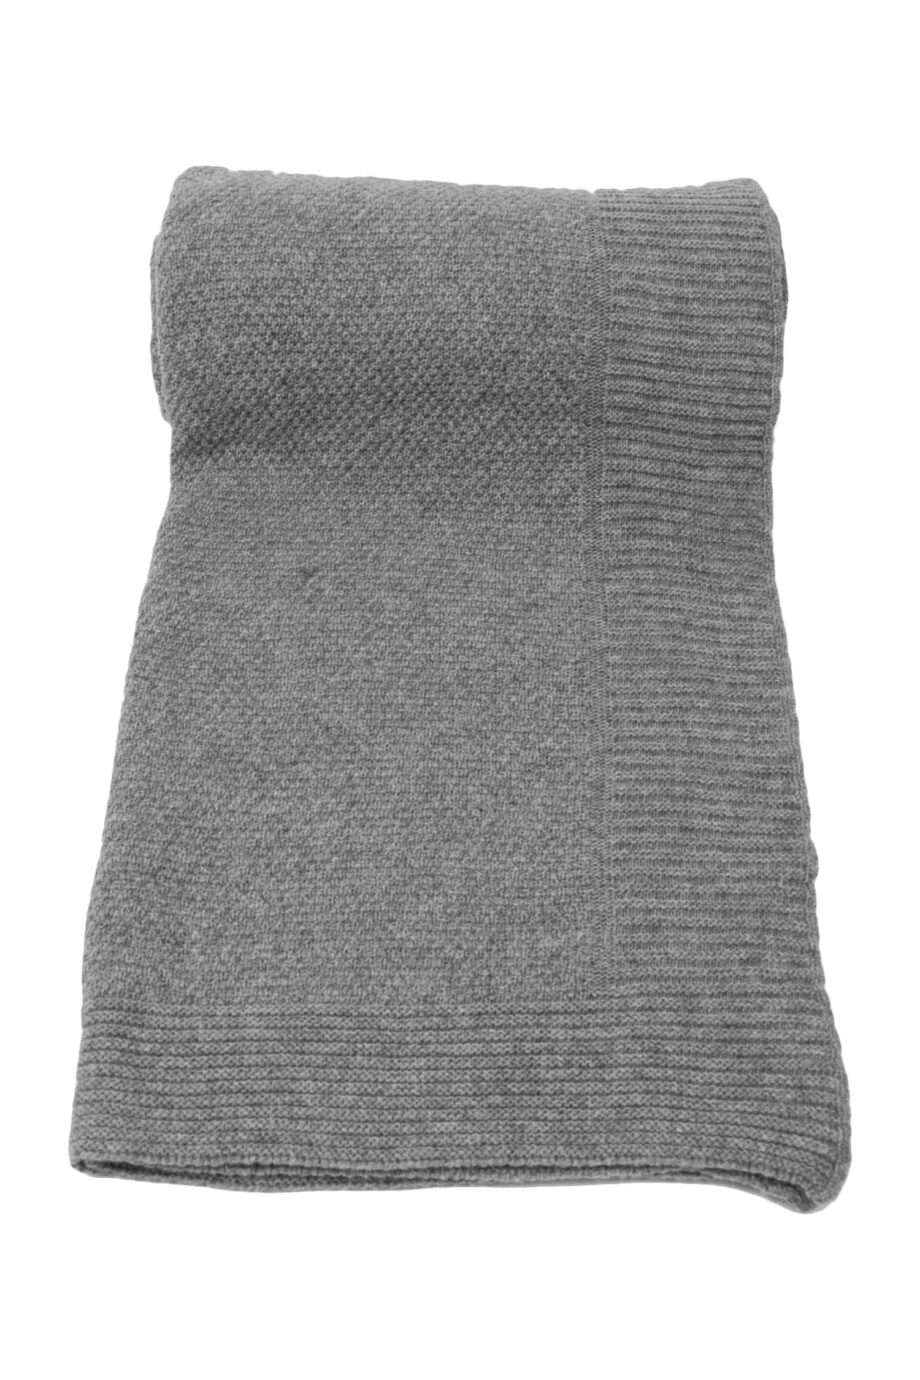 rice light grey knitted woolen plaid medium